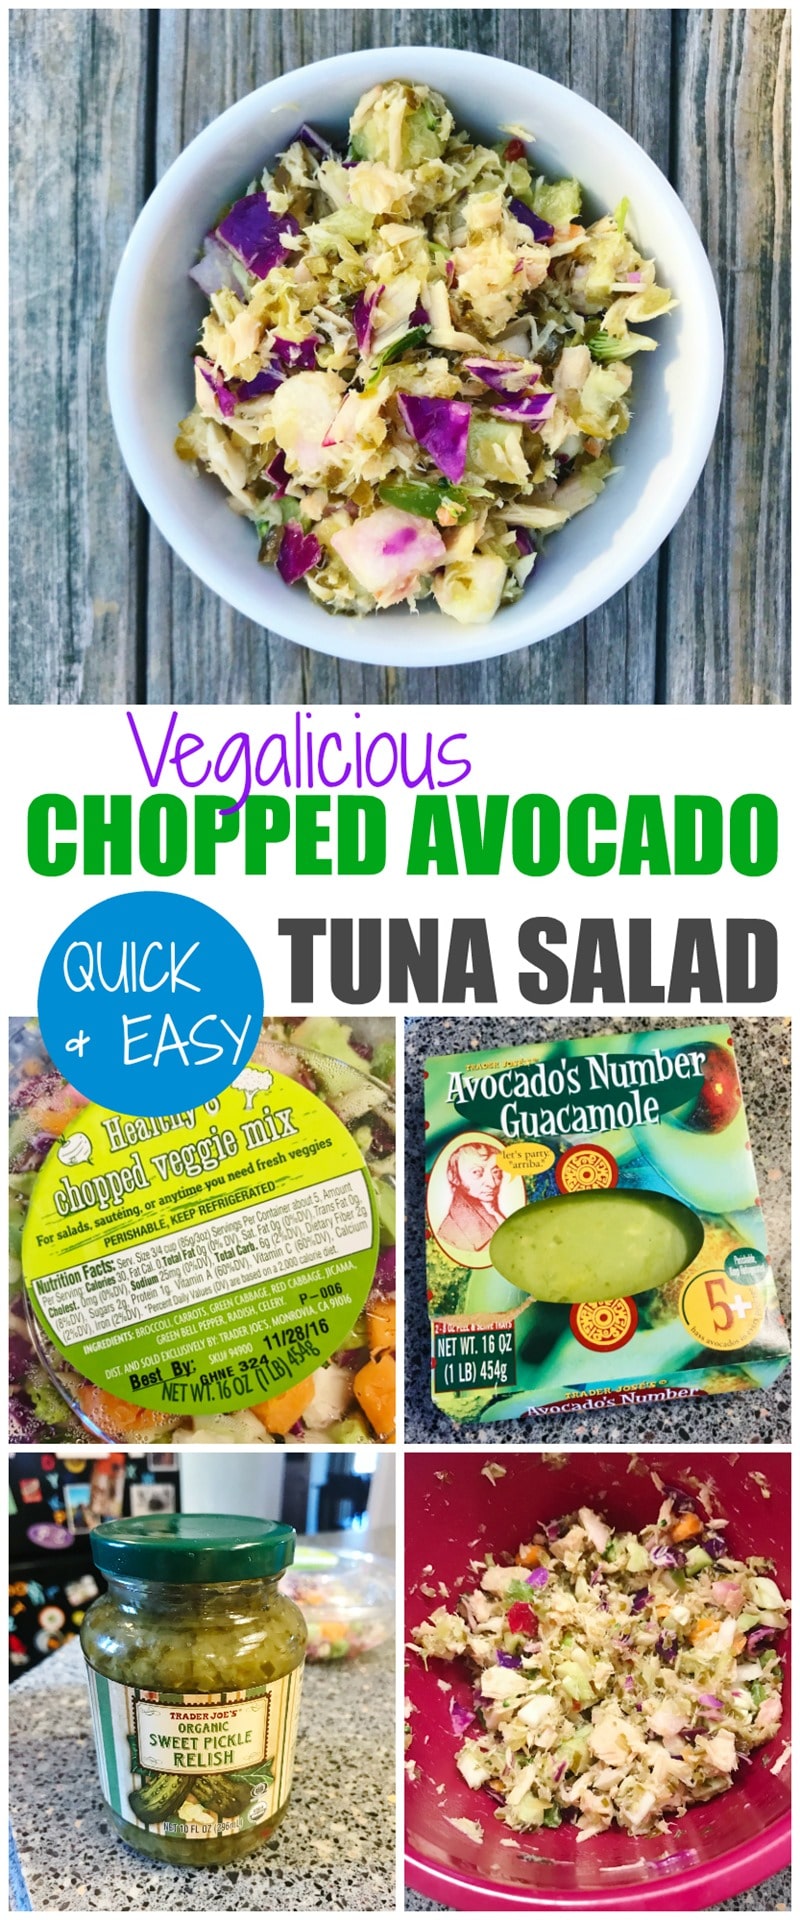 Vegalicious Chopped Avocado Tuna Salad